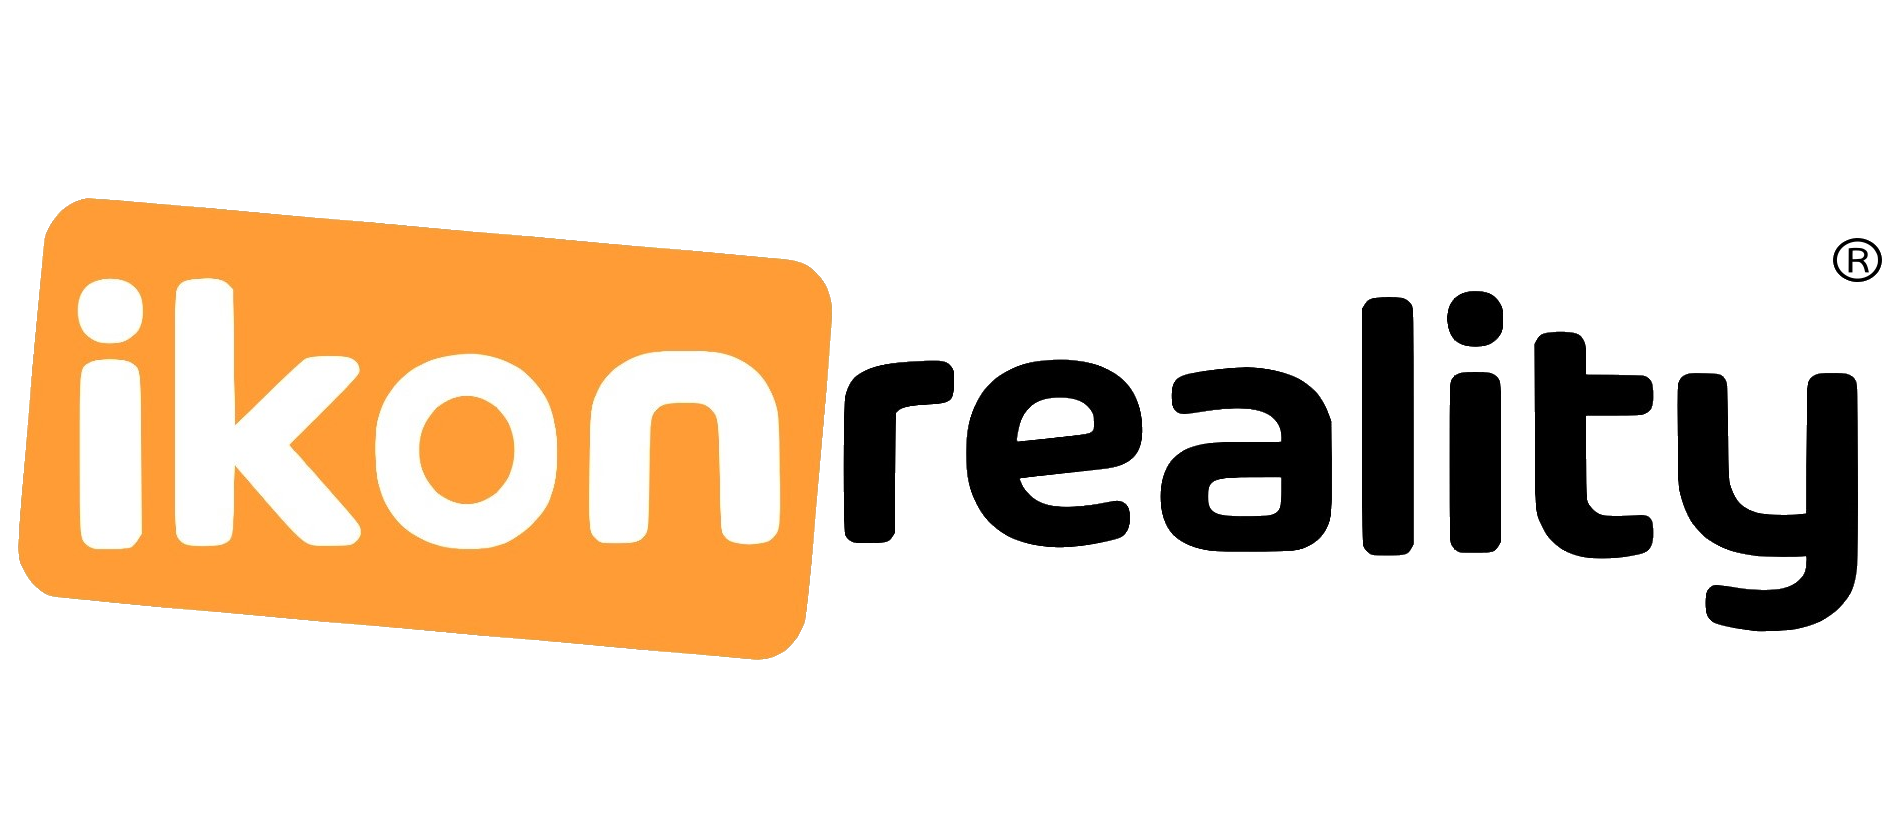 Realitná kancelária ikonreality Logo